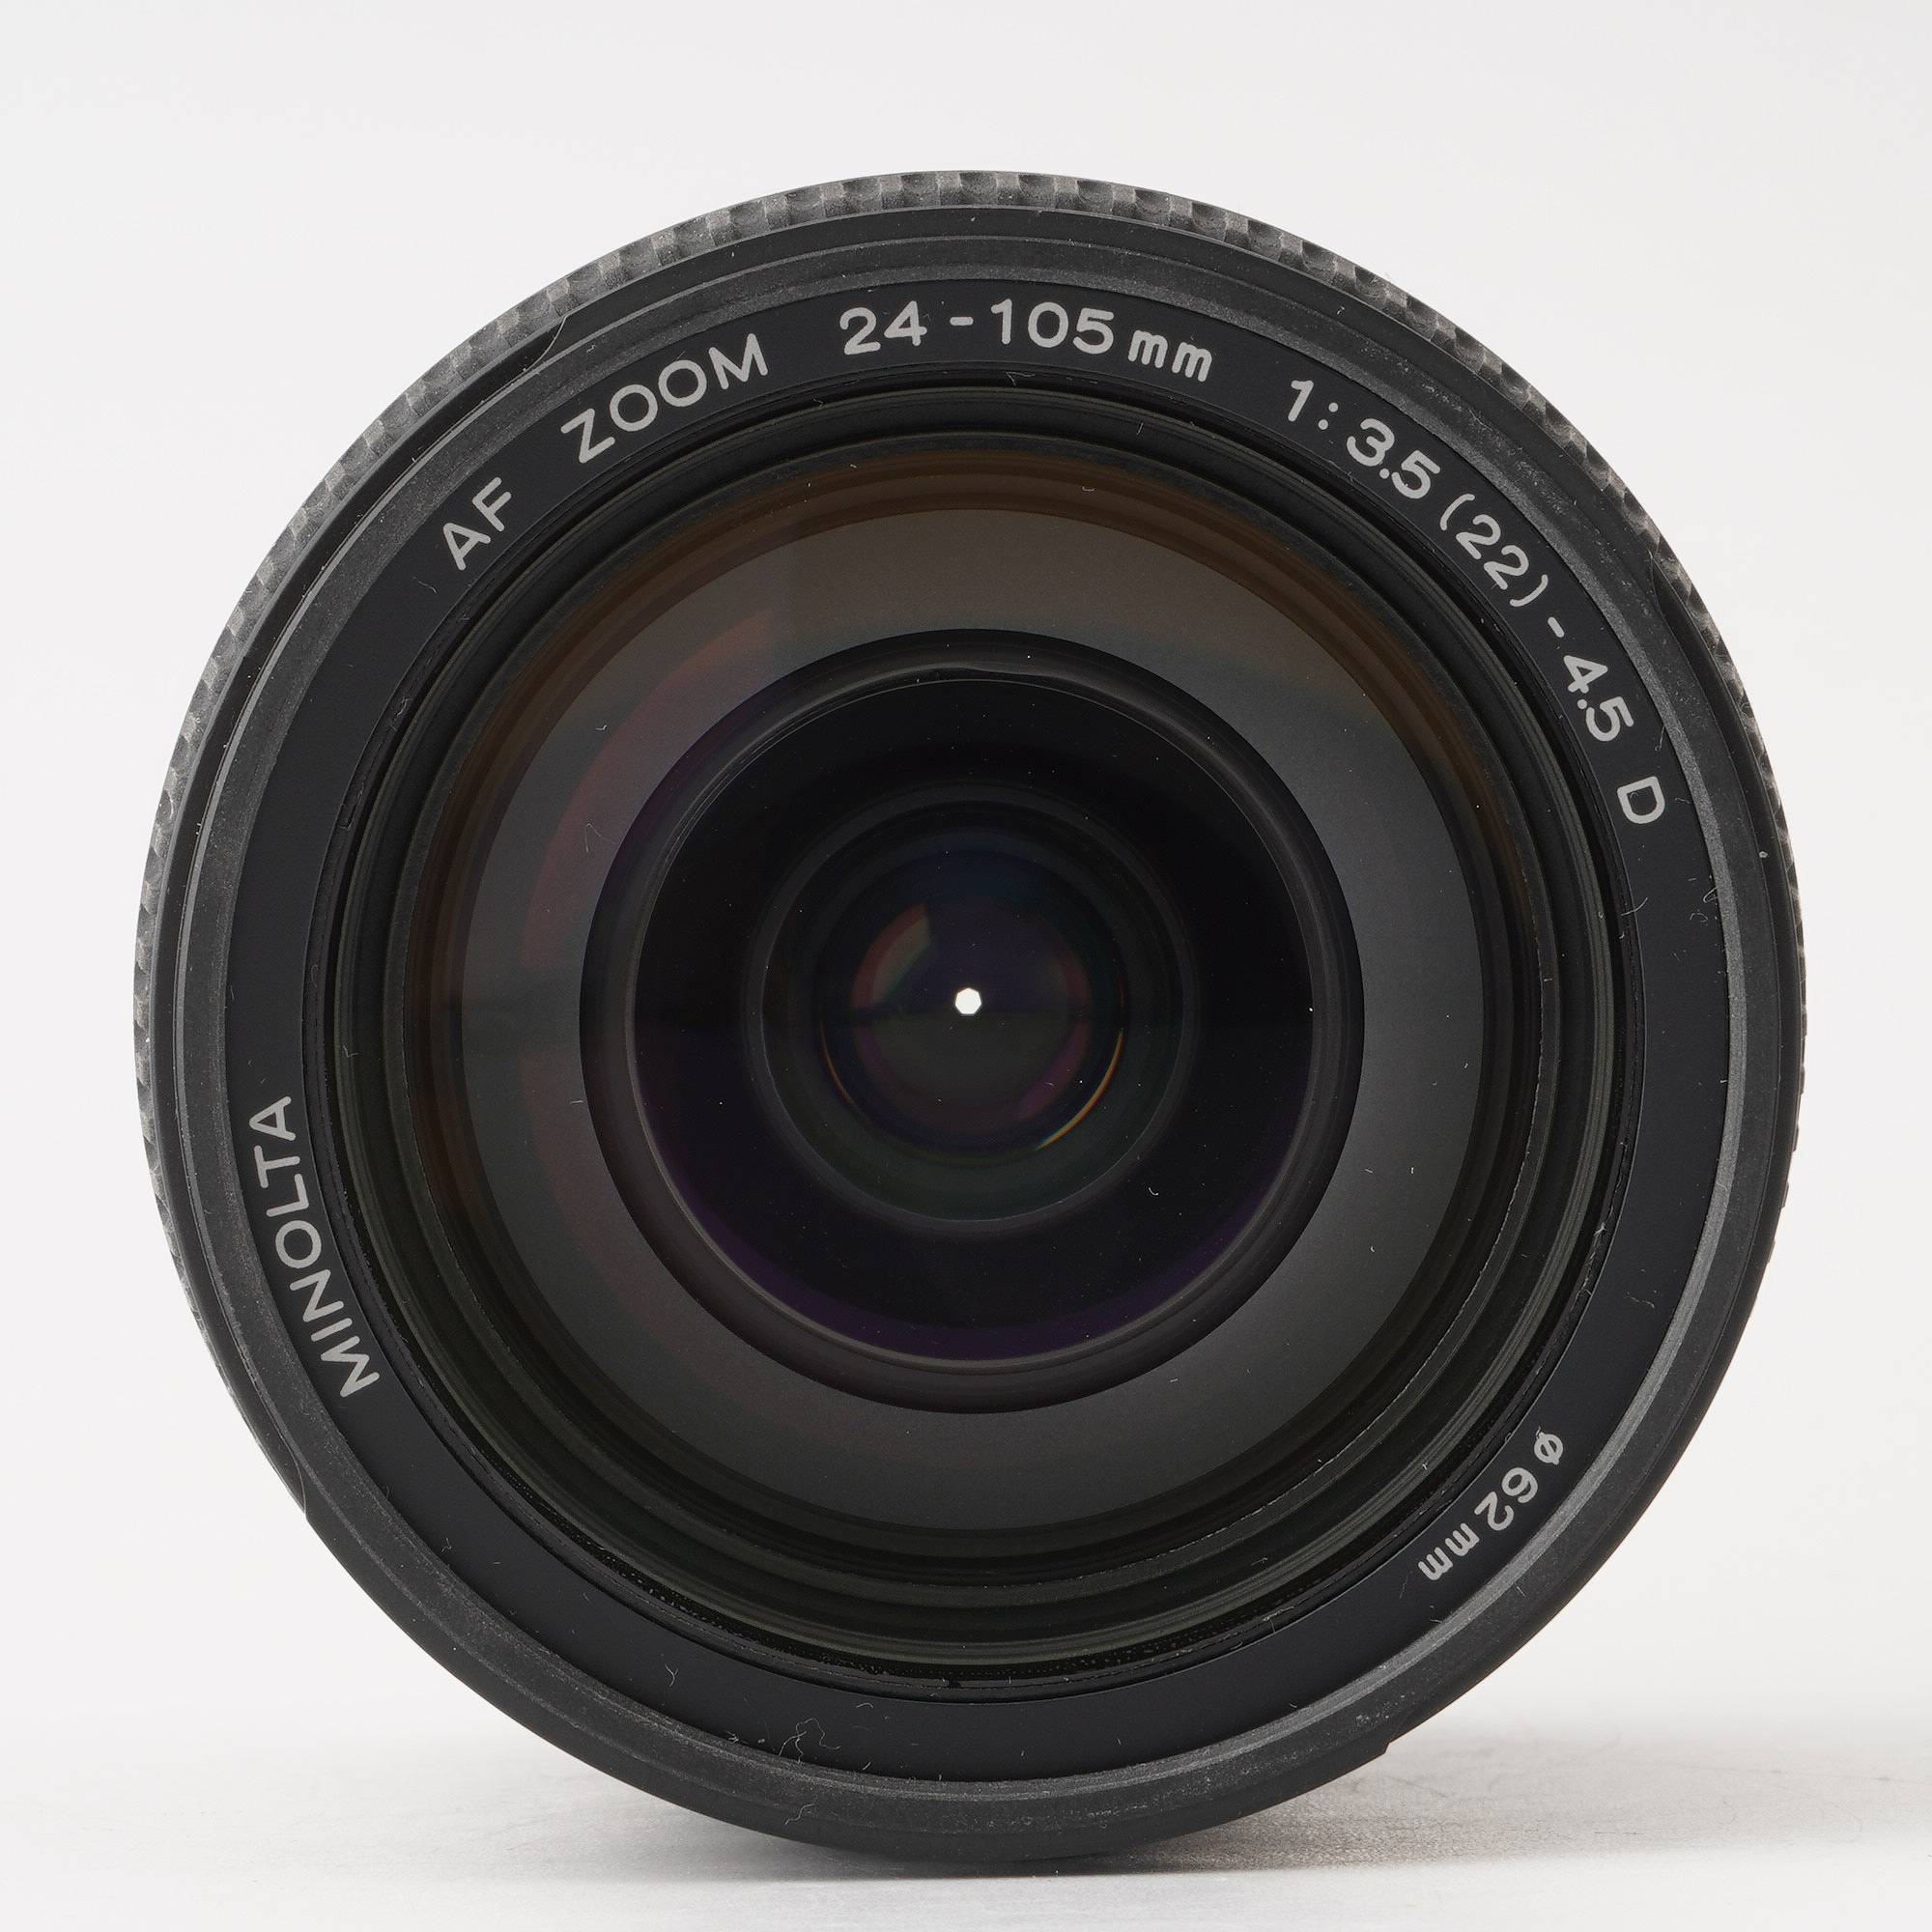 Minolta ミノルタ α-7 レンズ AF Zoom 24-105mm